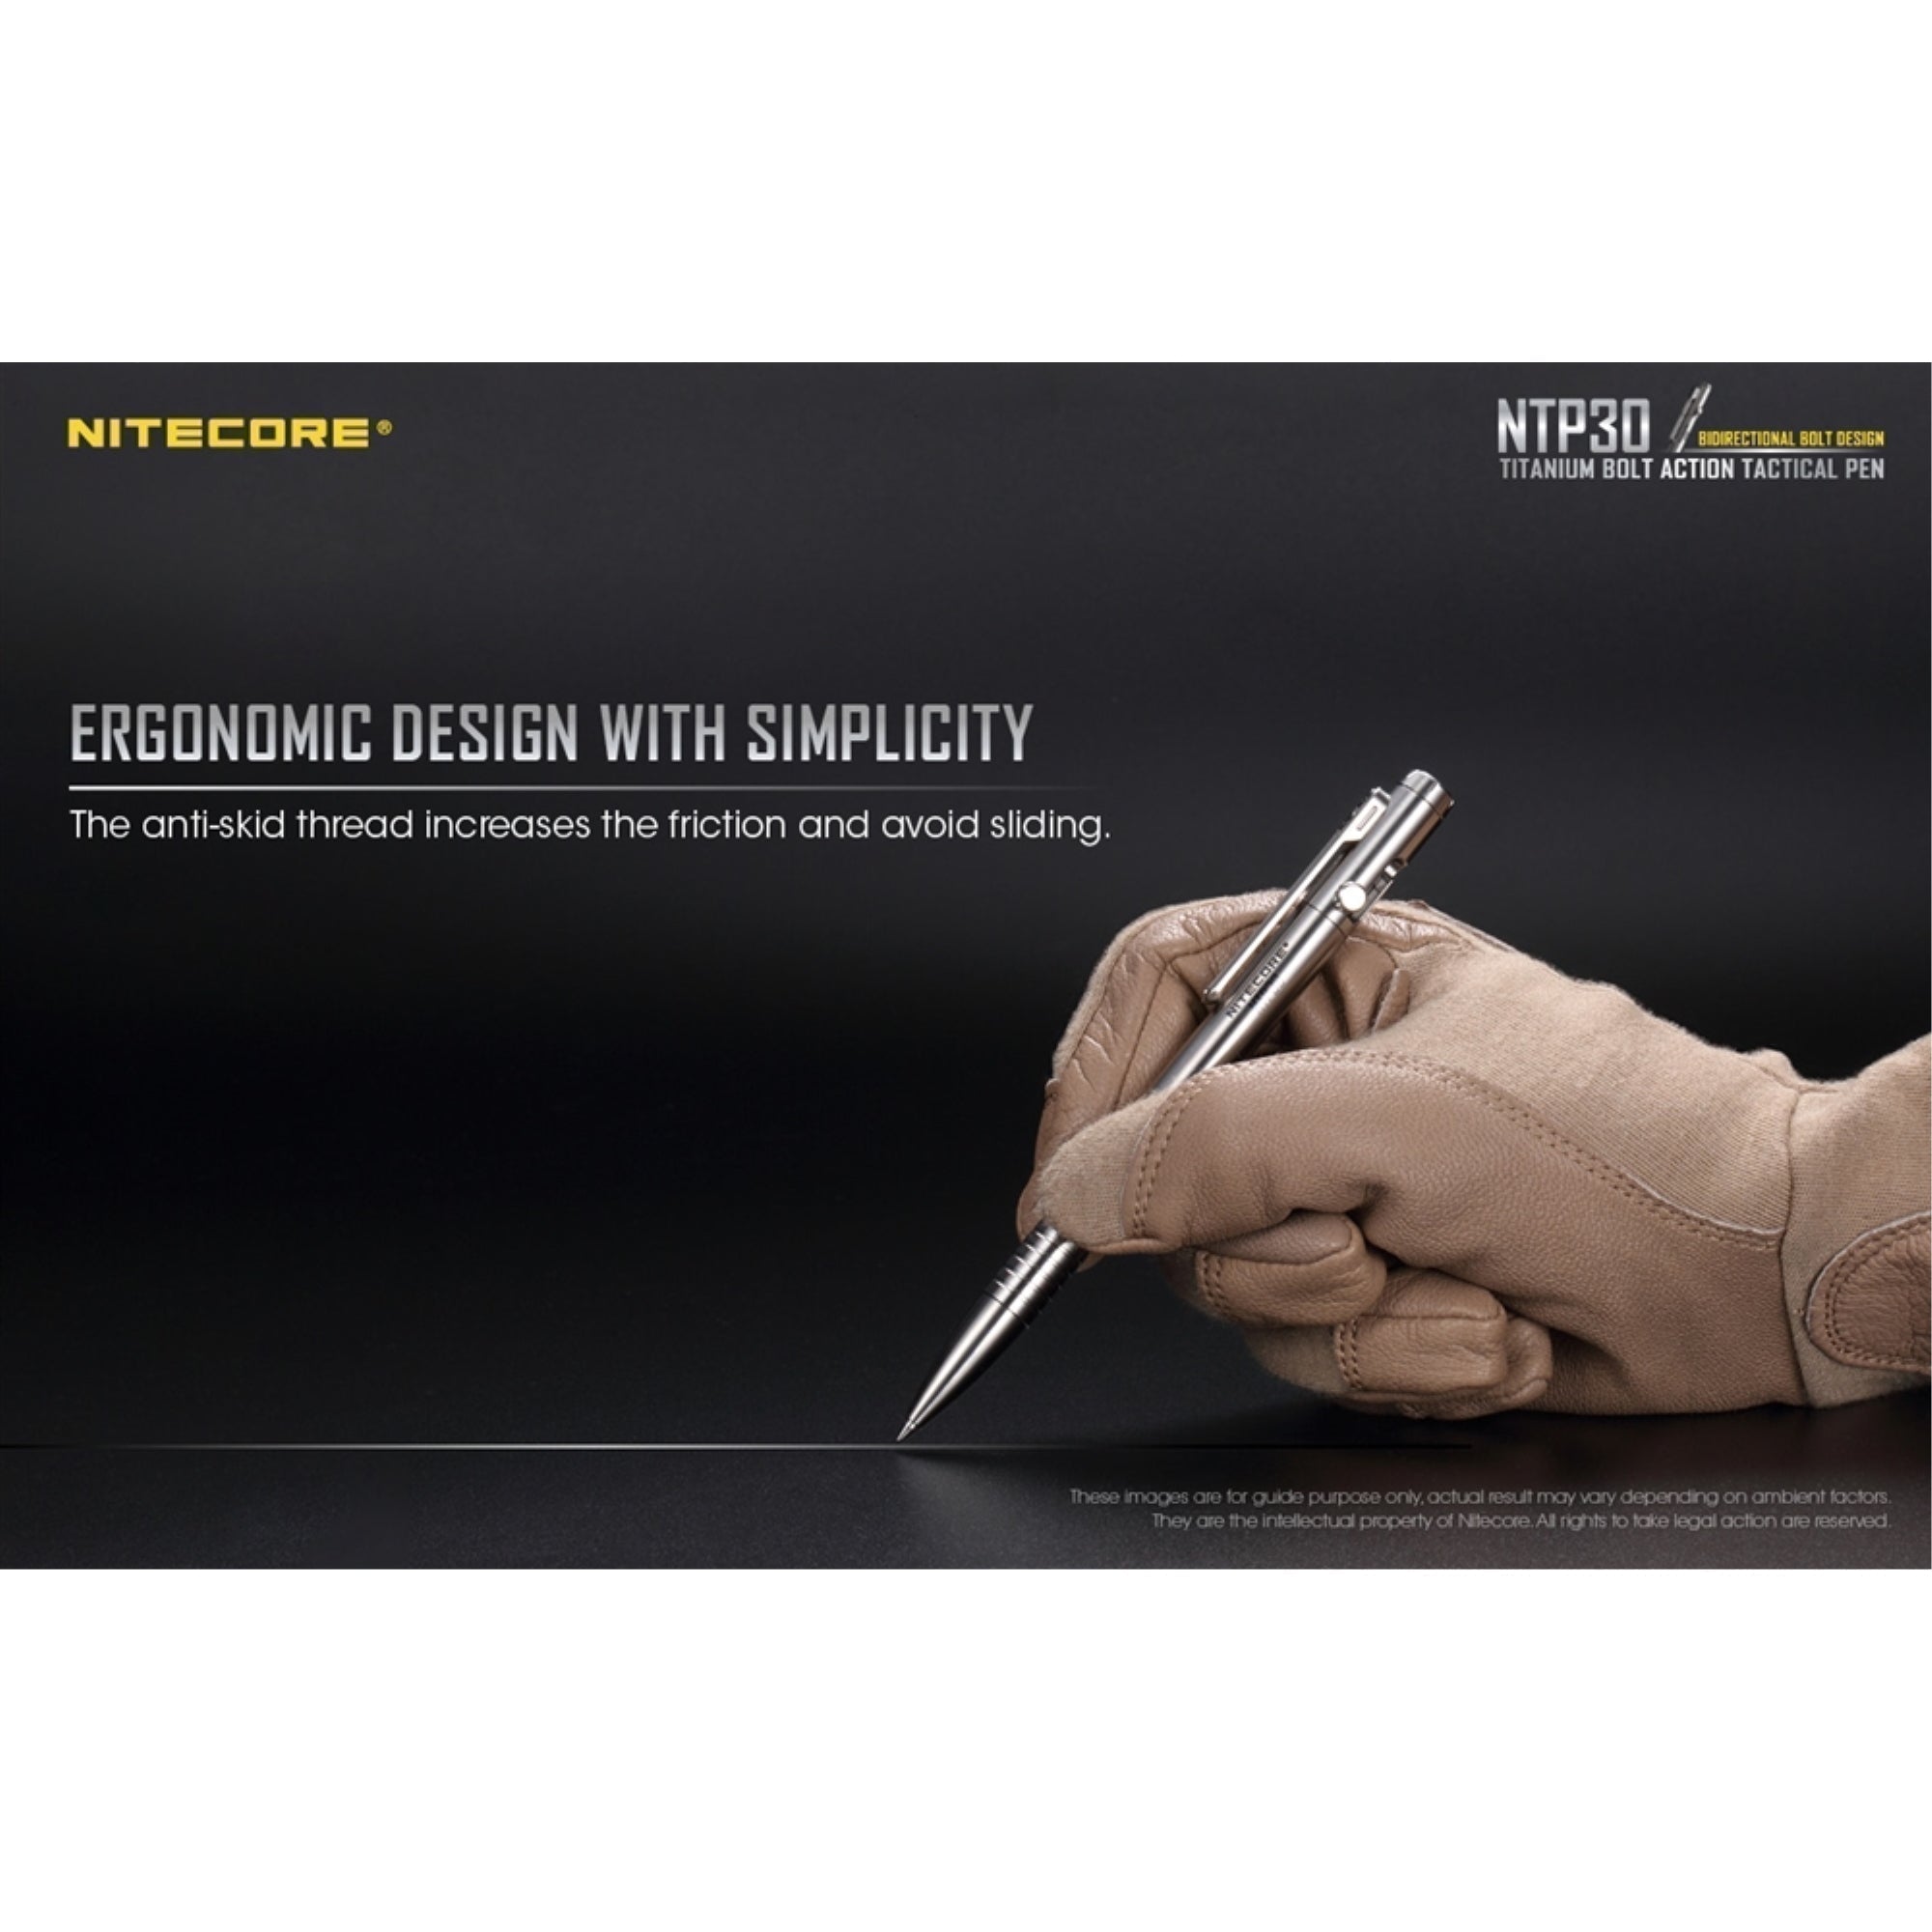 Knives & Tools - Nitecore NTP30 Titanium Bidirectional Bolt Action Multifunction Pen